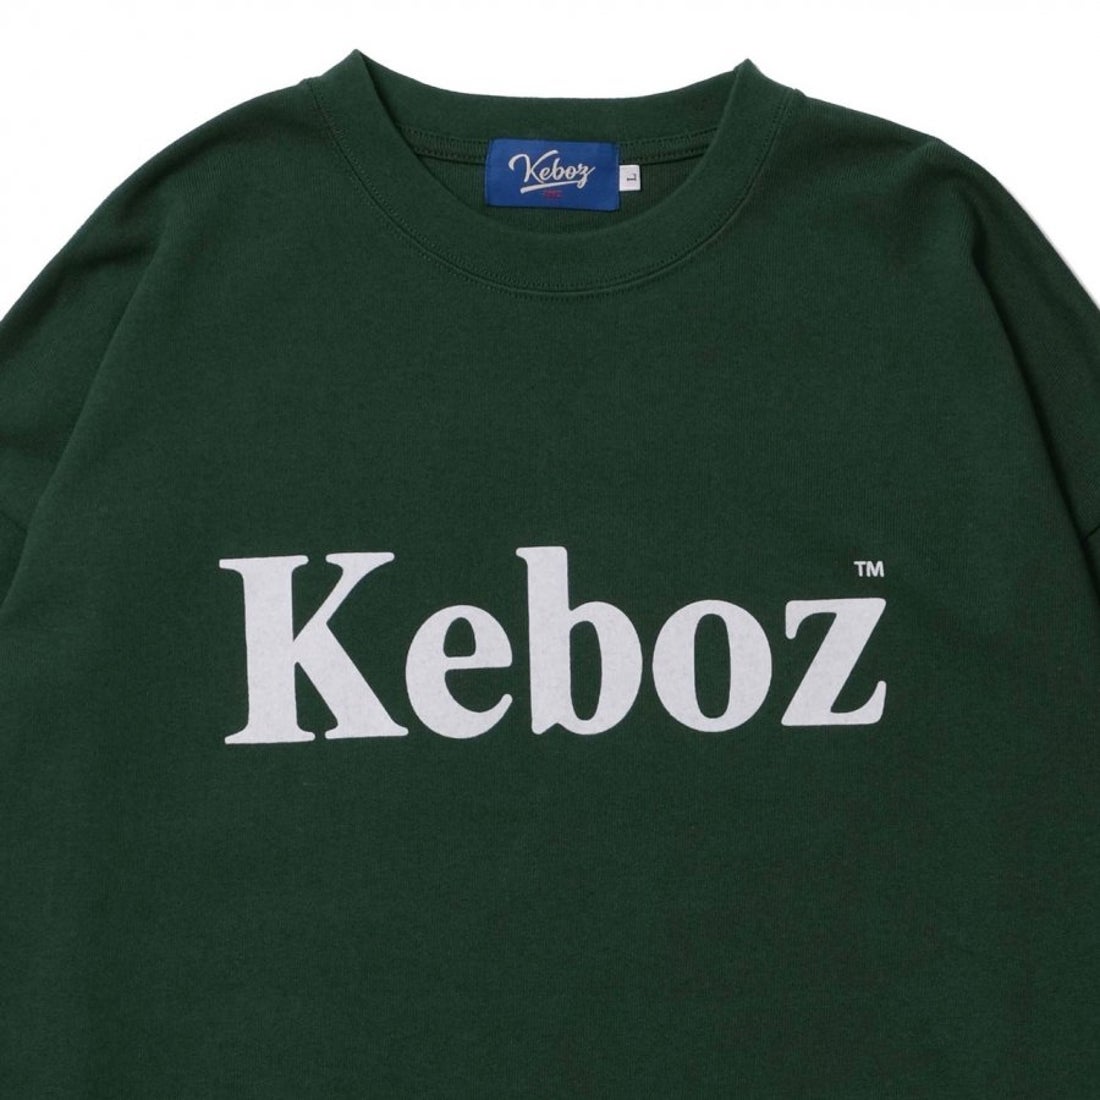 keboz Tシャツ FOREST GREEN Lサイズ